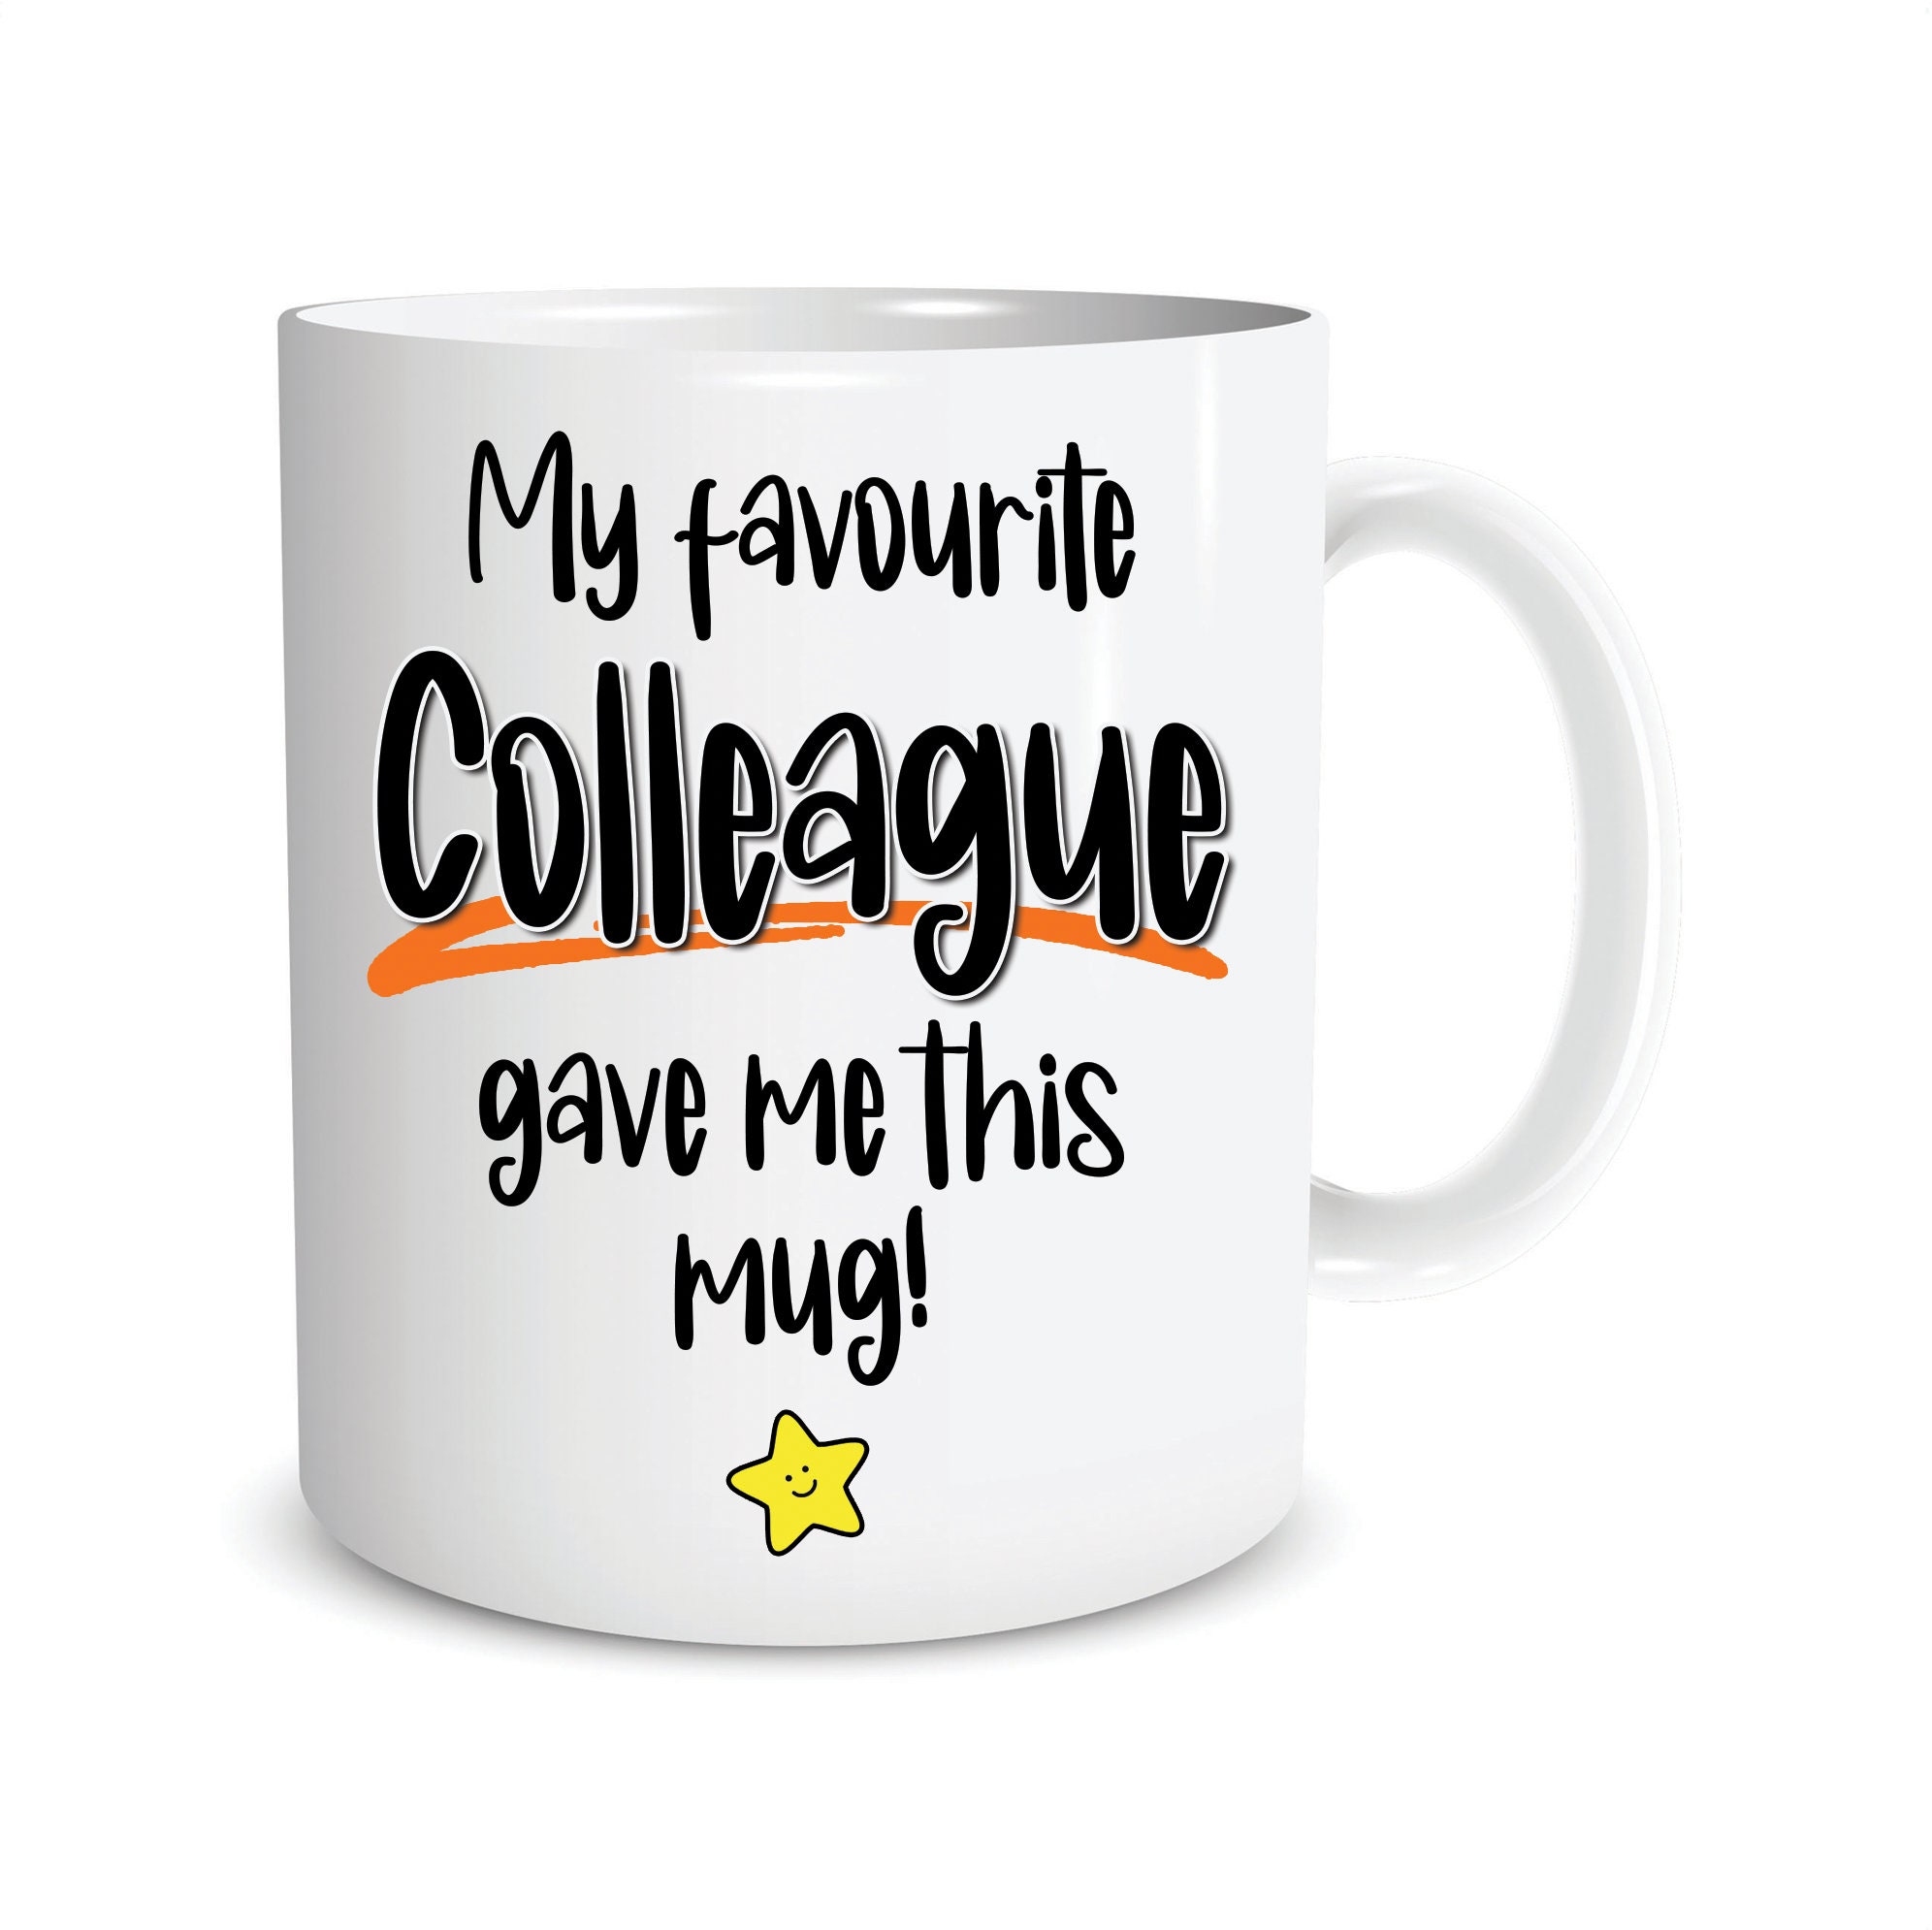 16. Funny Mug for Colleague